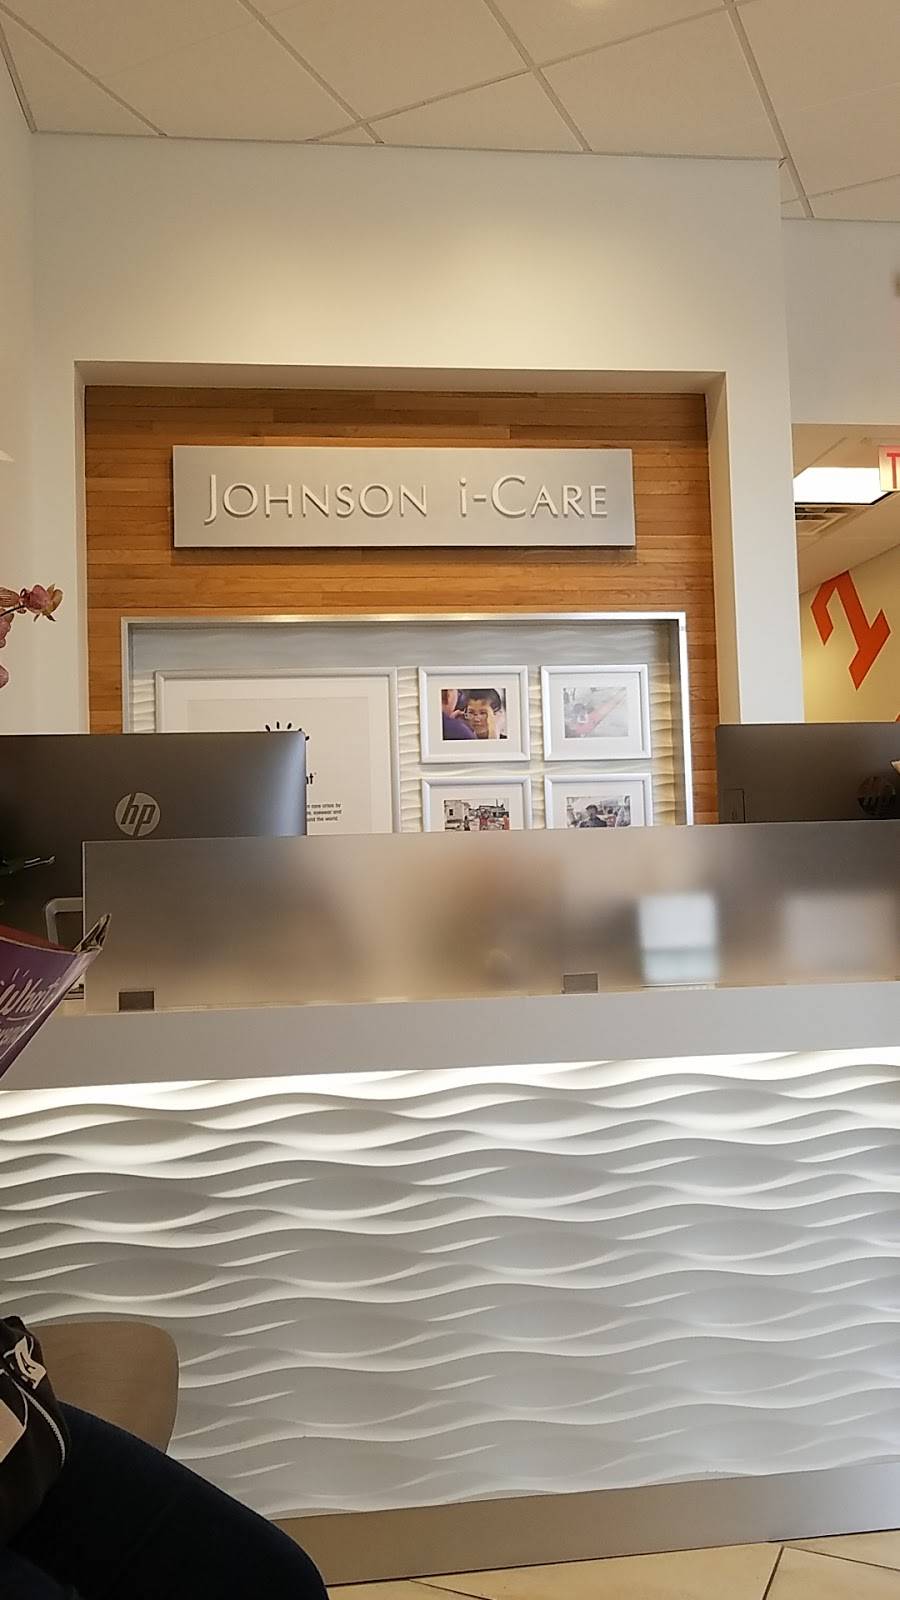 Johnson i-Care at LensCrafters | 1024 Glenbrook Way, Hendersonville, TN 37075, USA | Phone: (615) 822-8464